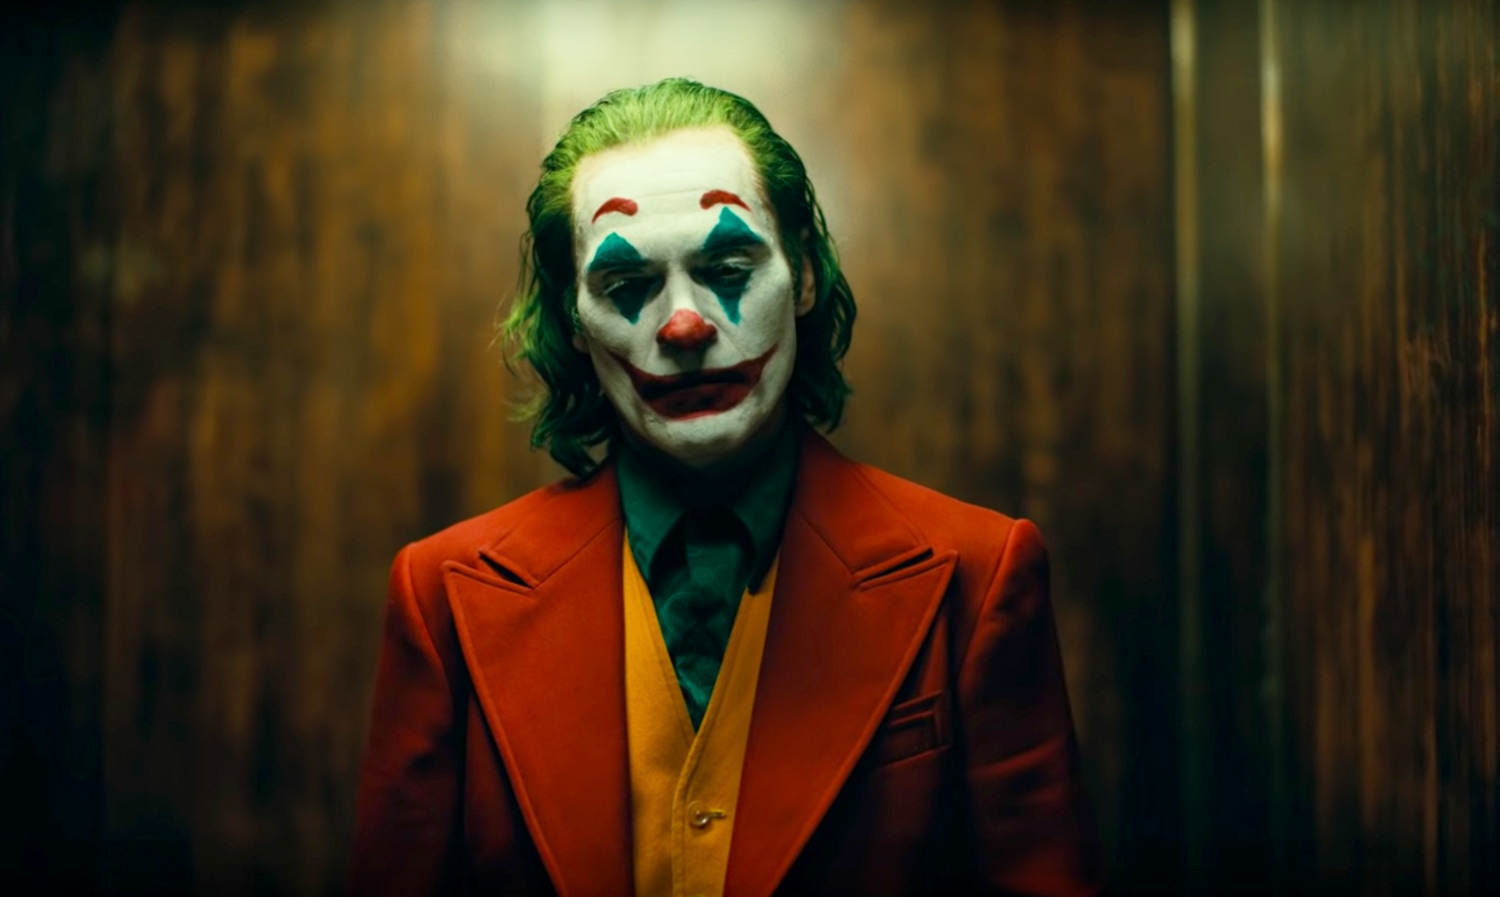 Creepy 'Joker' trailer released with Joaquin Phoenix starring as ...